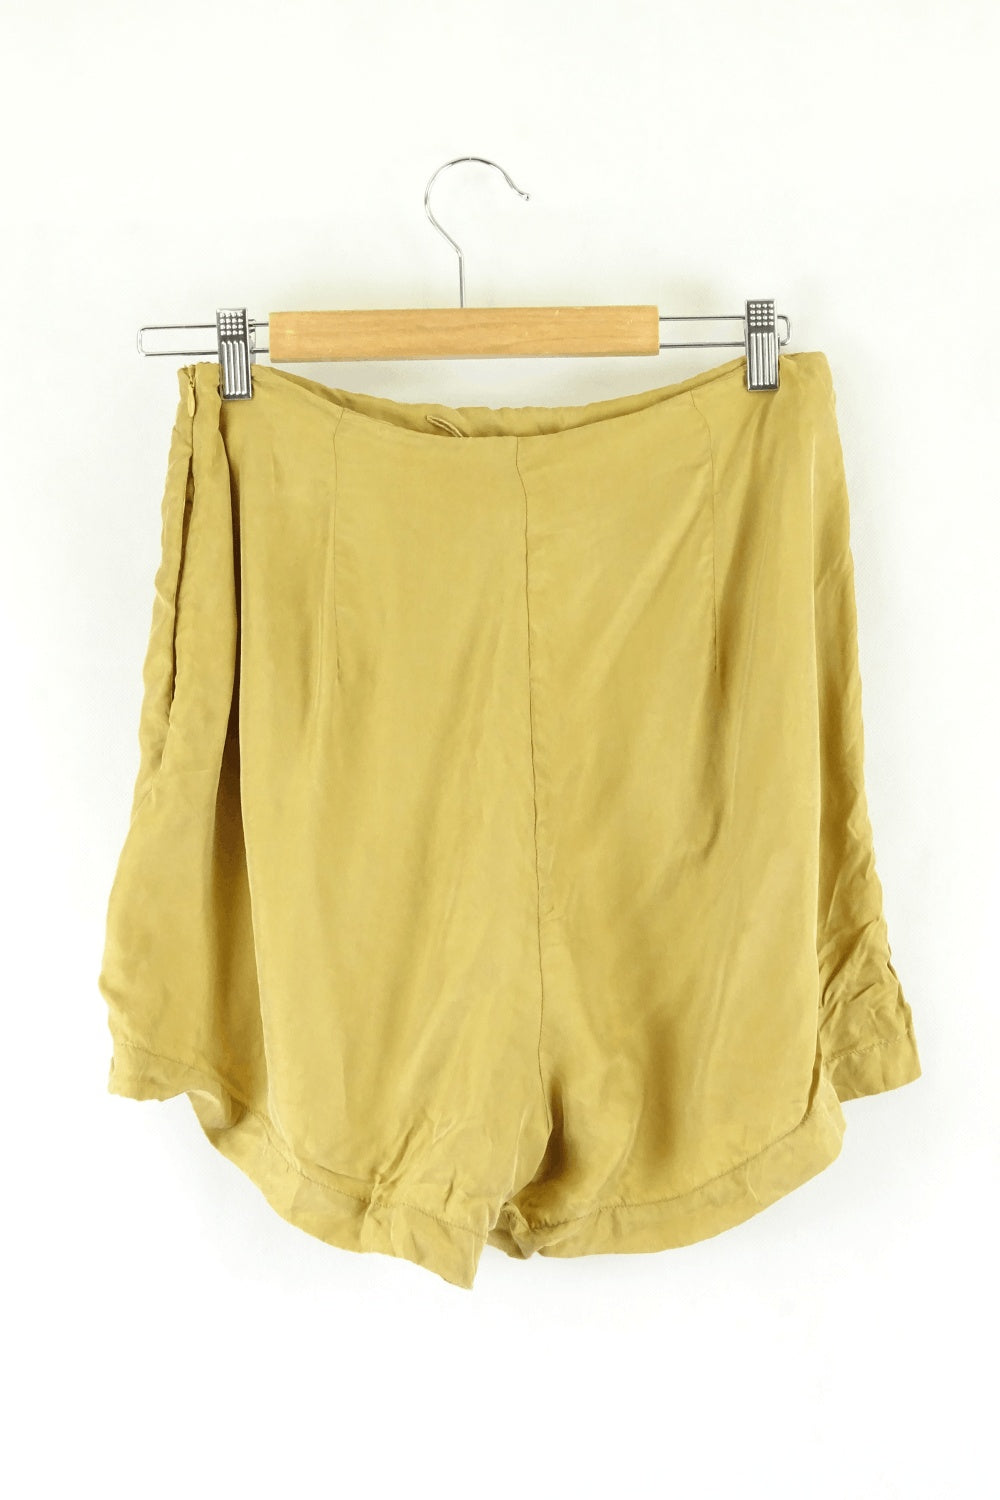 Sancia Yellow Shorts M